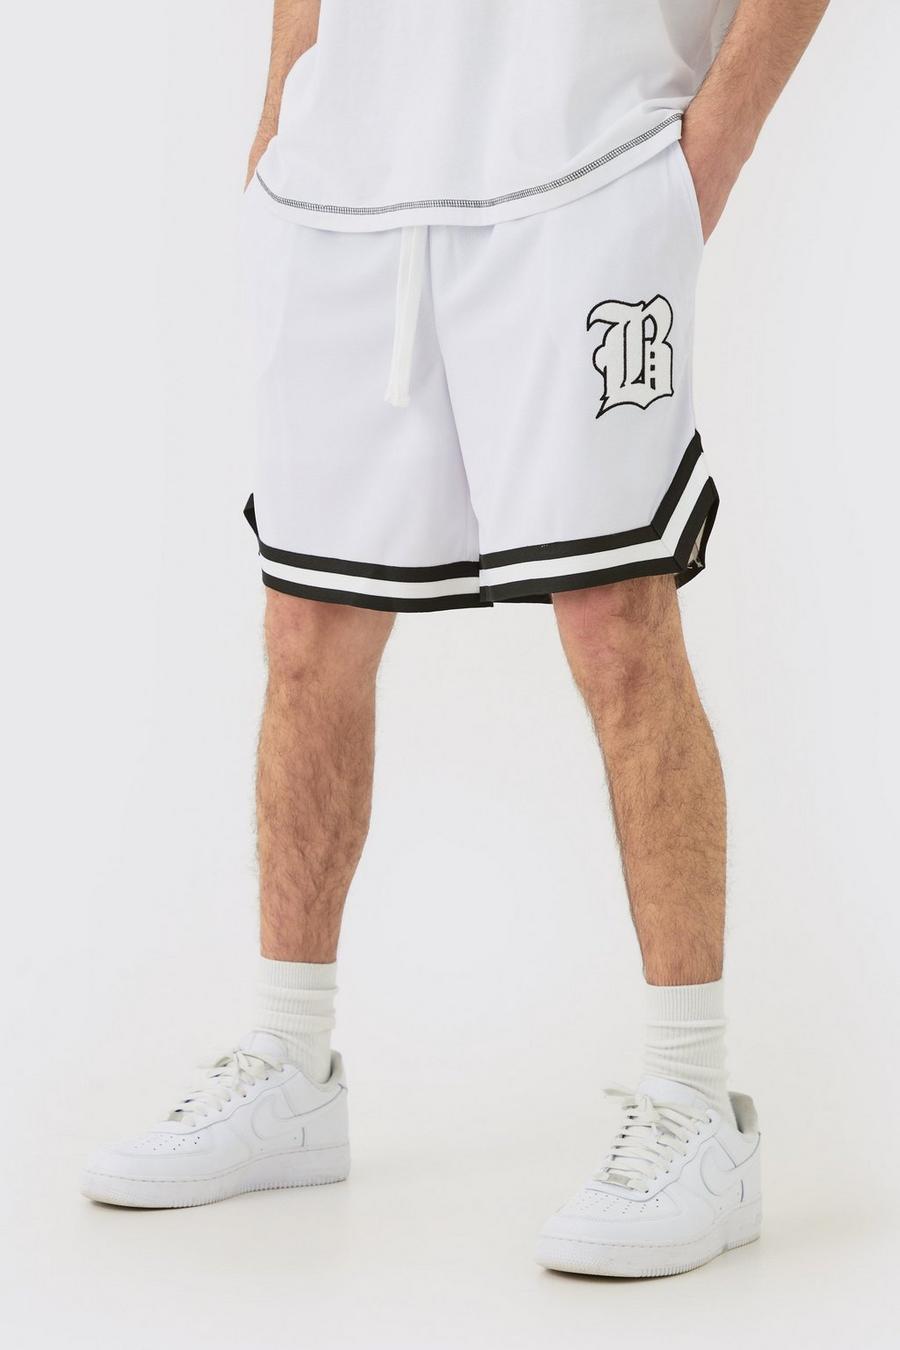 Pantalón corto holgado estilo baloncesto de malla con aplique B, White